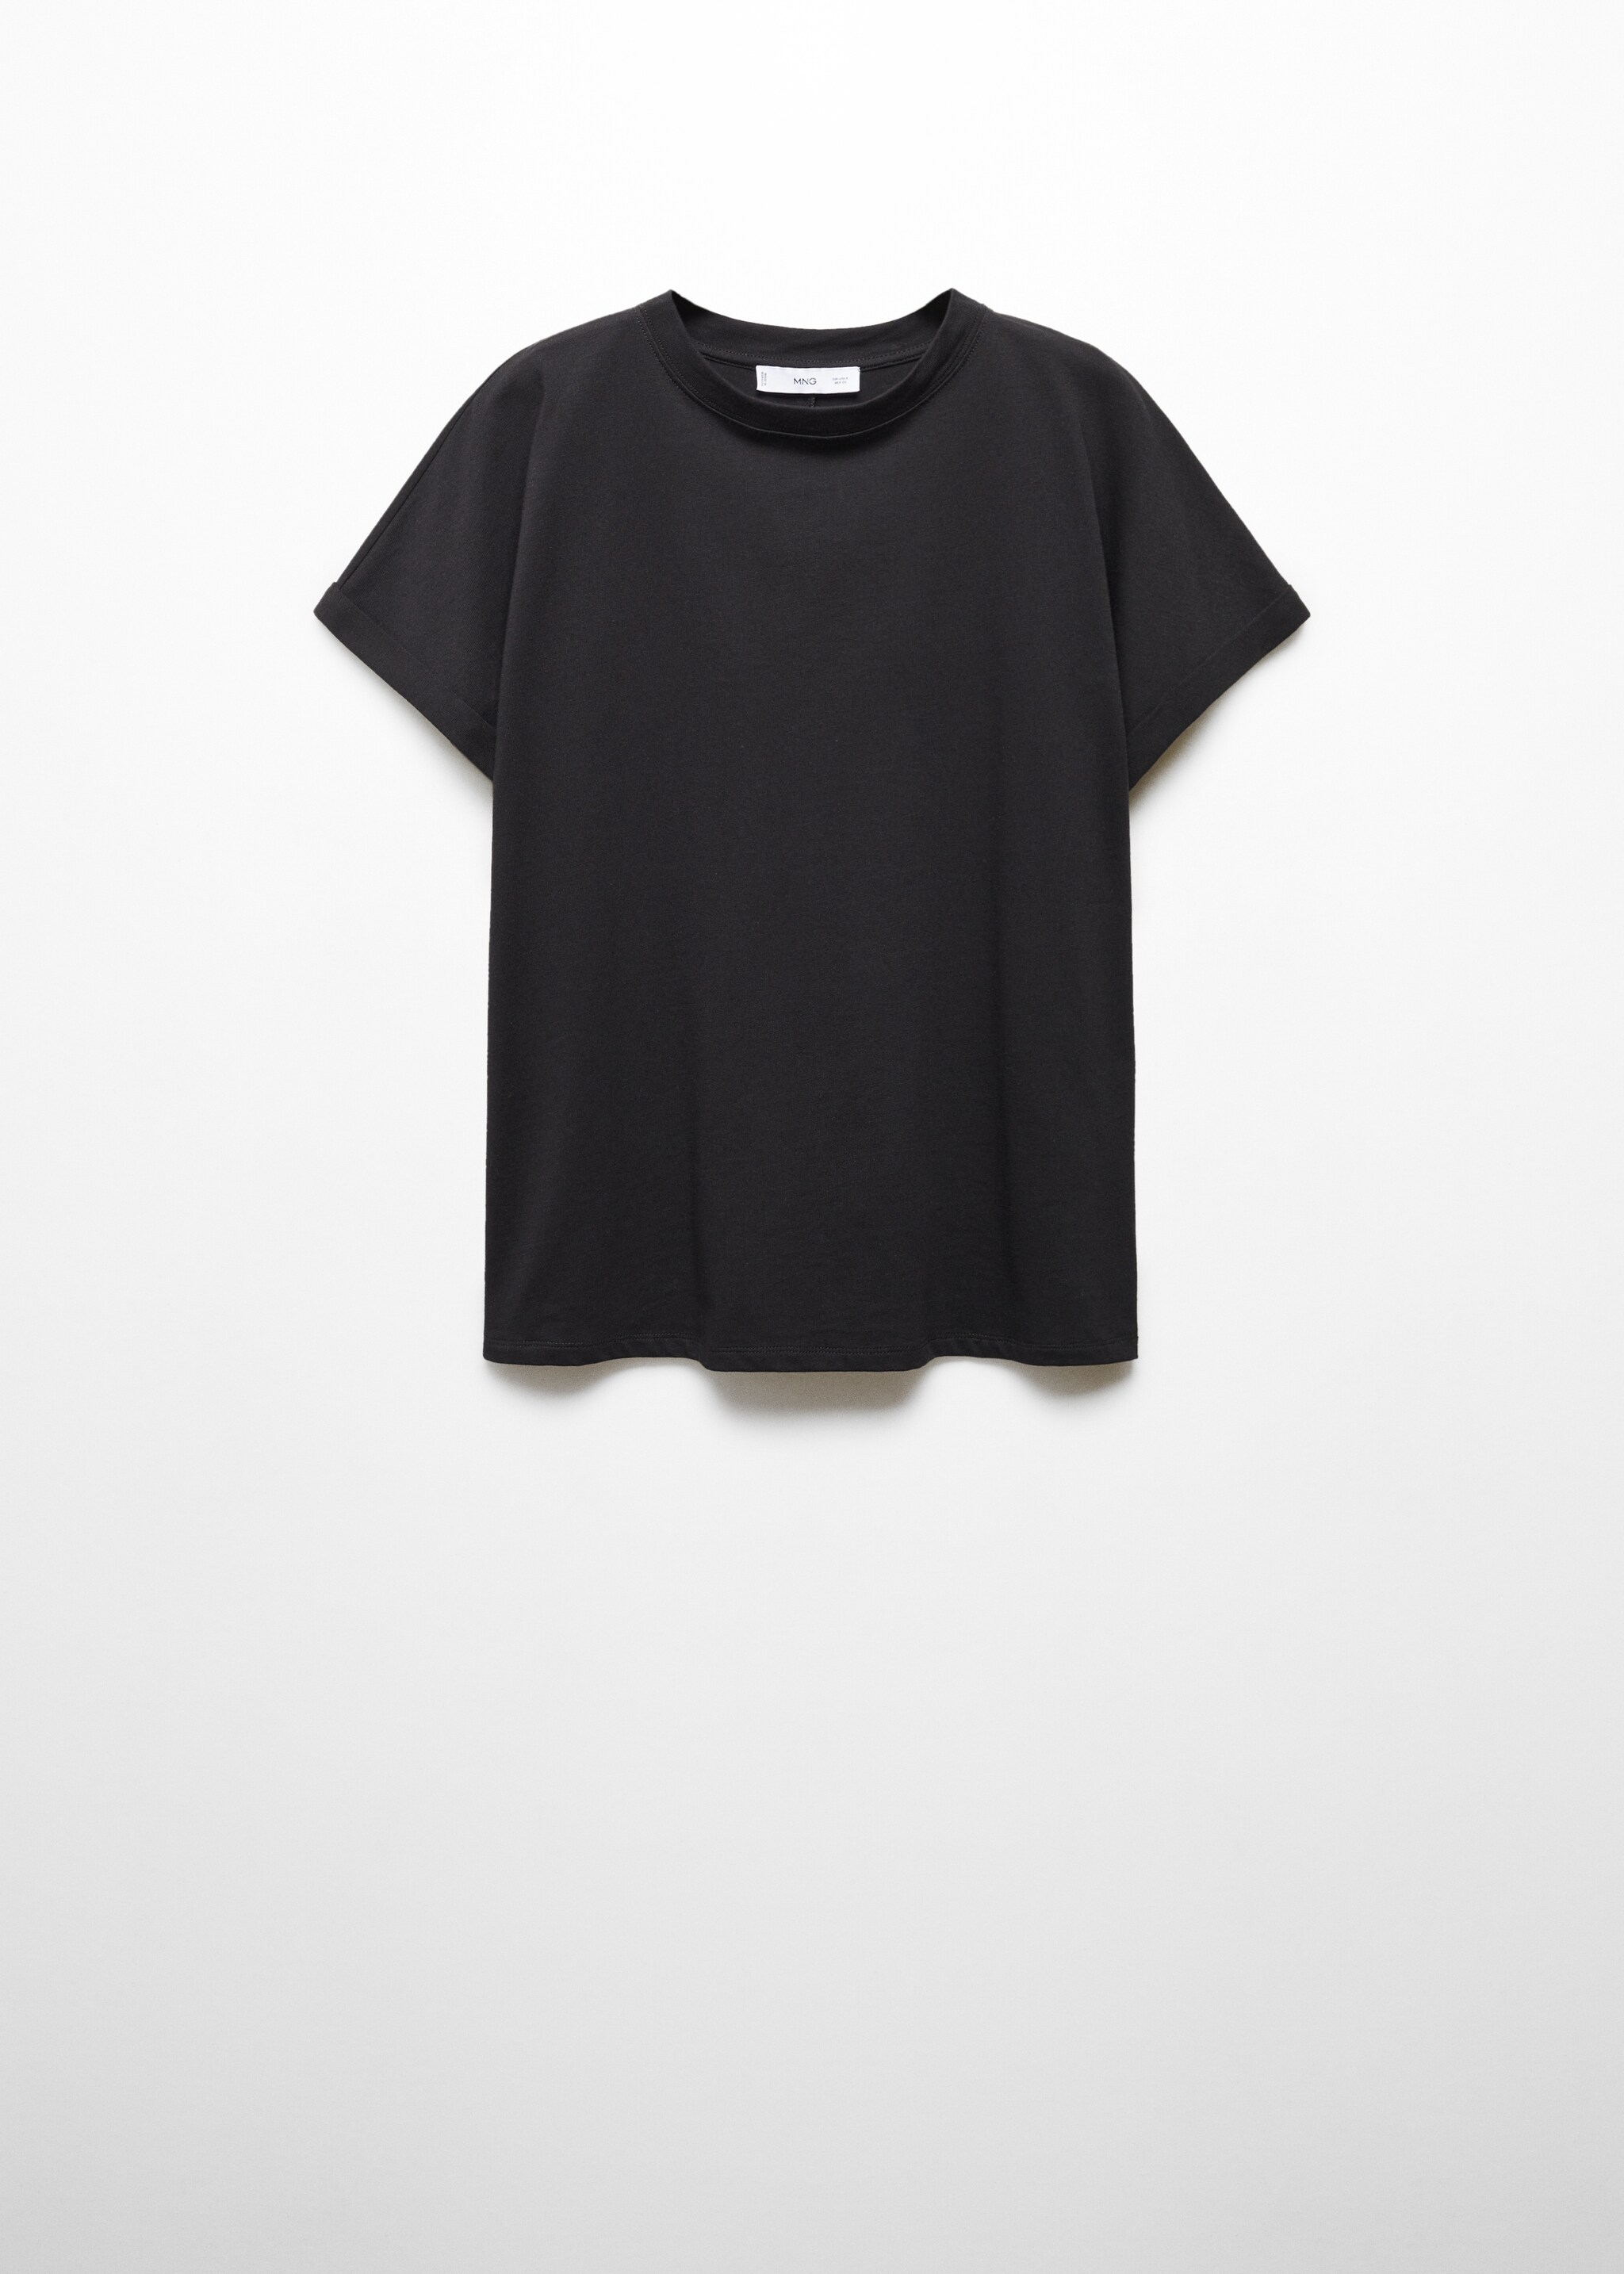 Camiseta algodón manga corta - Artículo sin modelo